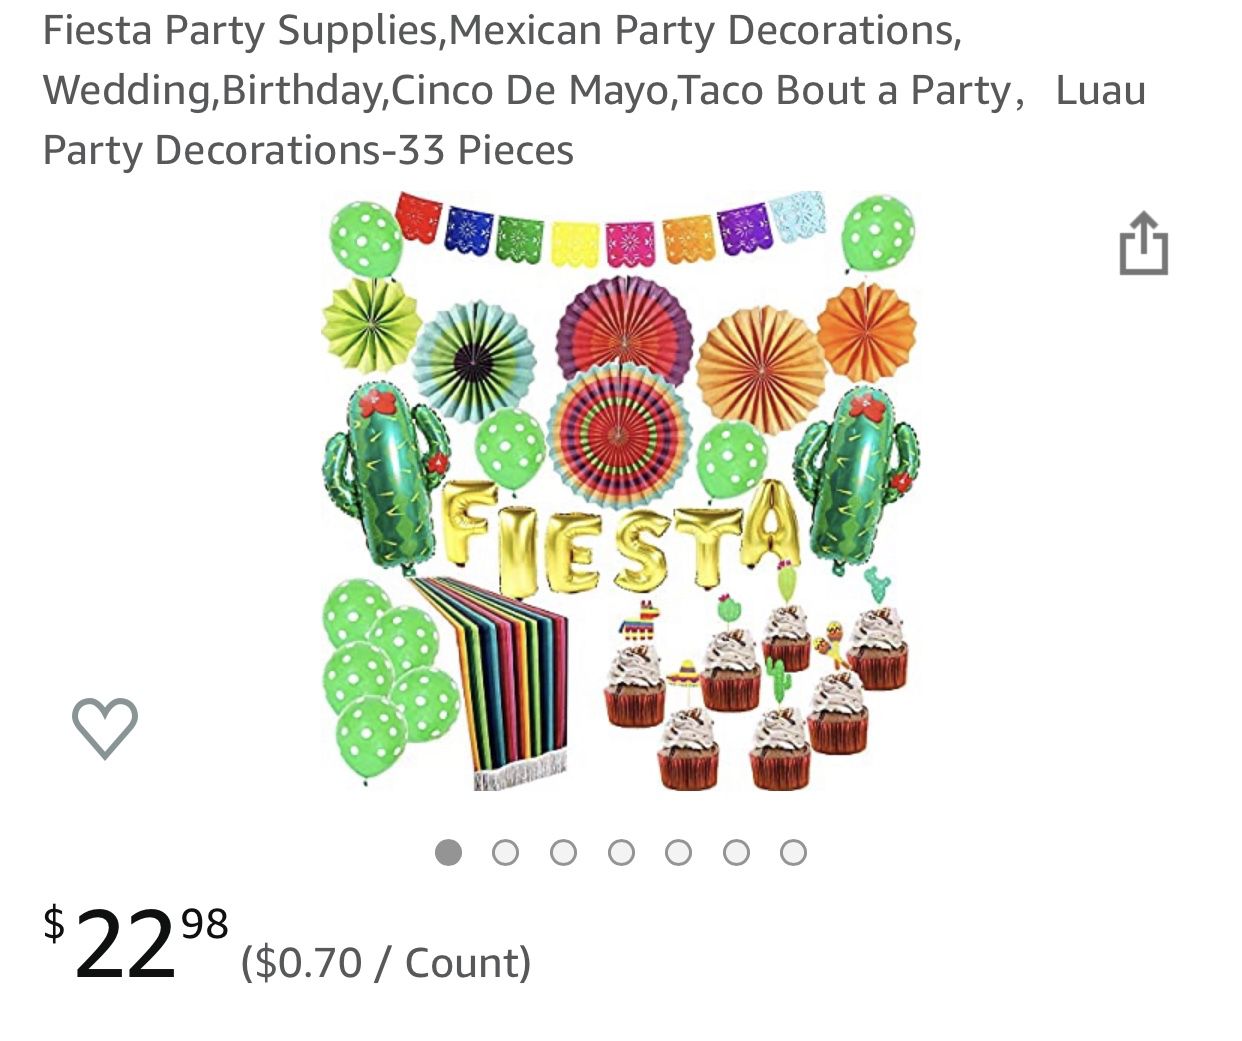 Fiesta Party Supplies,Mexican Party Decorations, Wedding,Birthday,Cinco De Mayo,Taco Bout a Party，Luau Party Decorations-33 Pieces